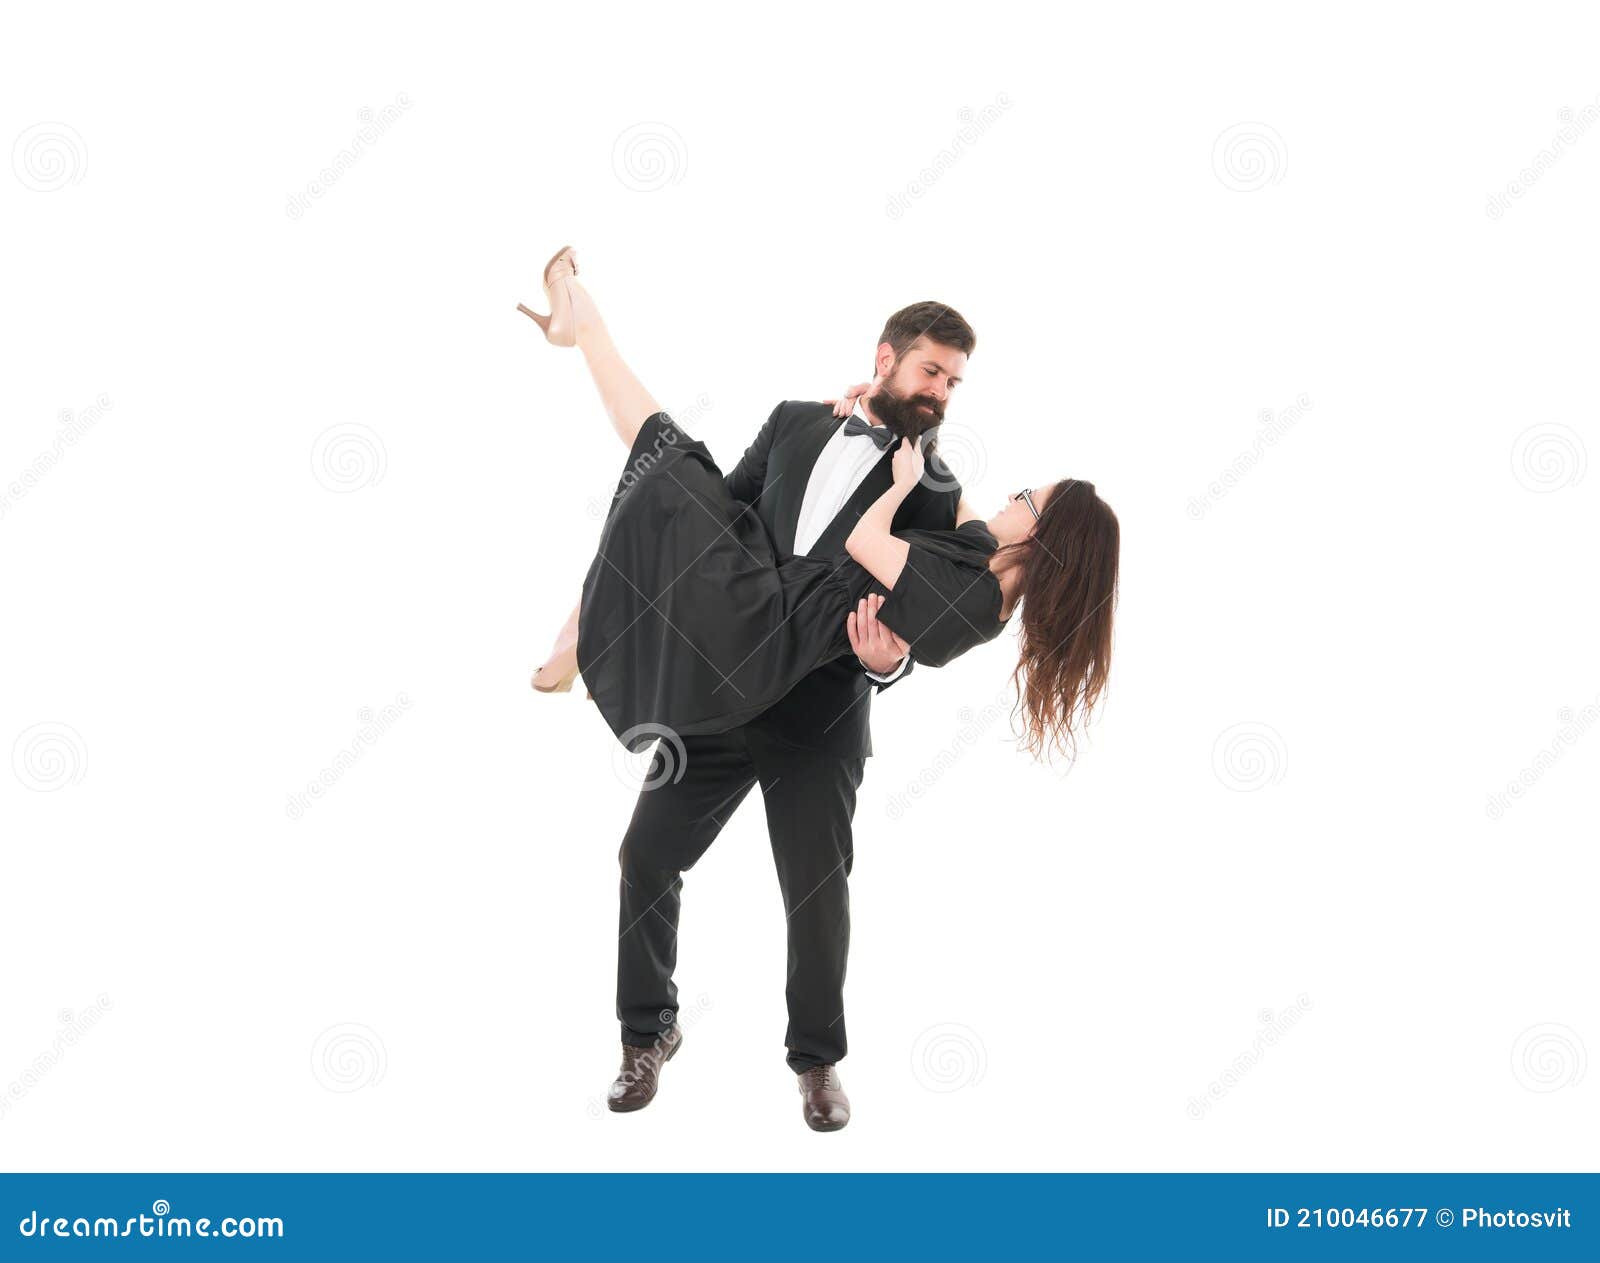 Entertainment Active Leisure Couple In Love Romantic Dance Romantic Evening Date Stock Image